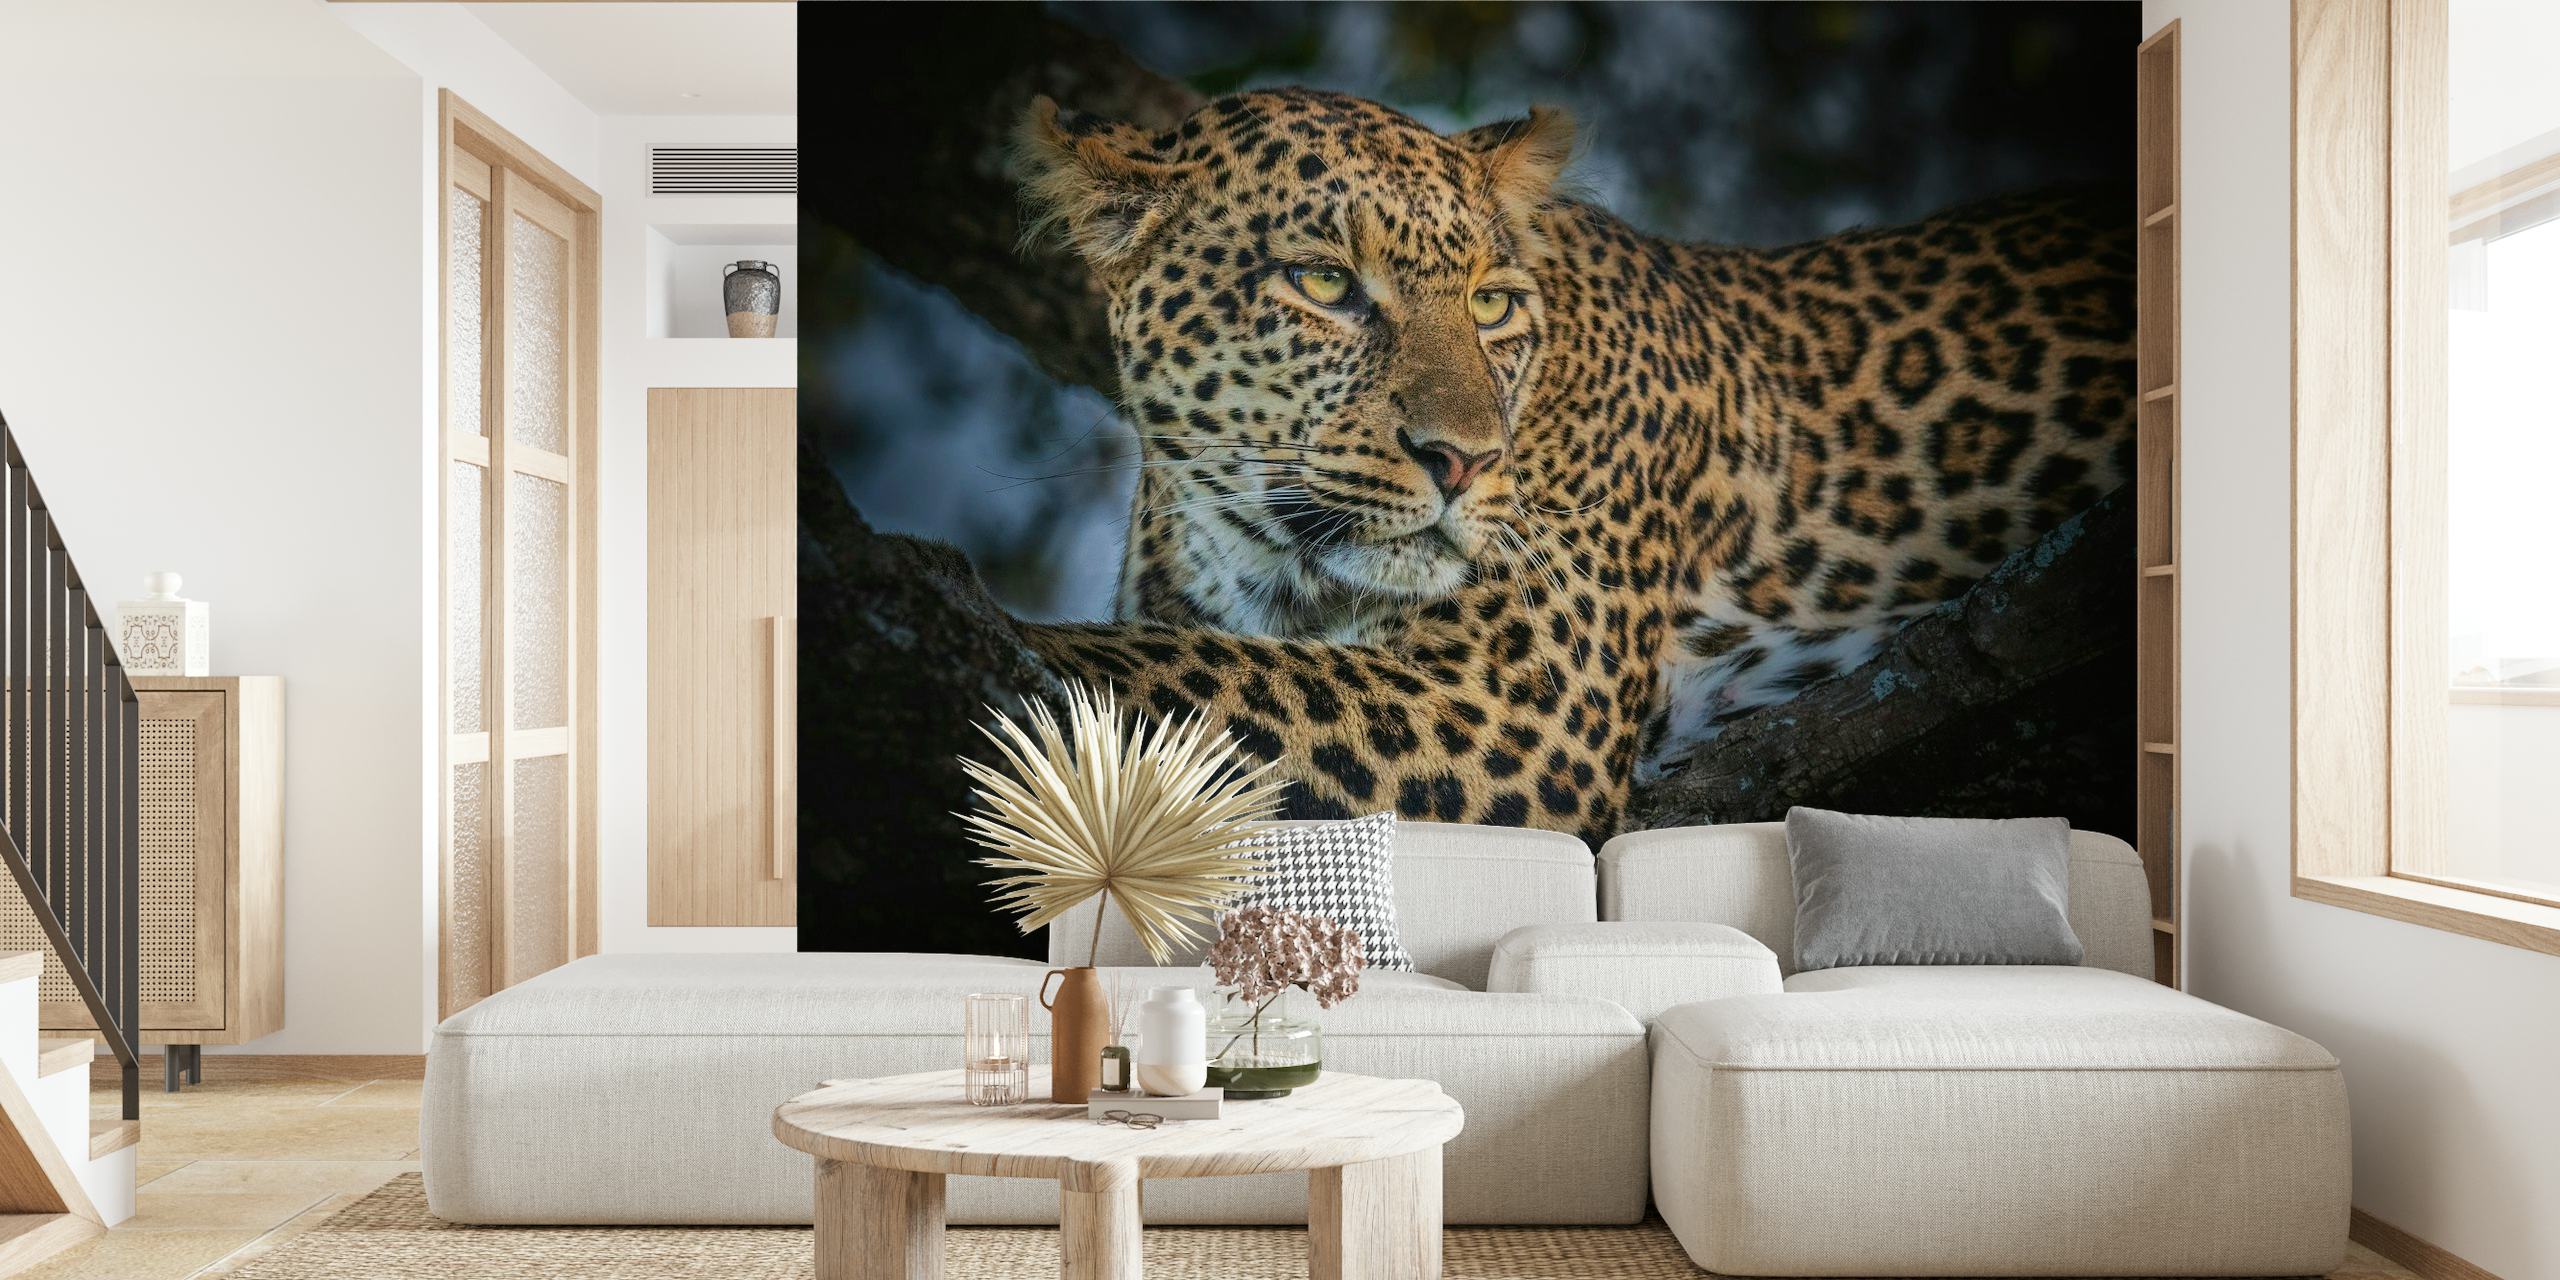 The Leopard Wallpaper - Buy Now